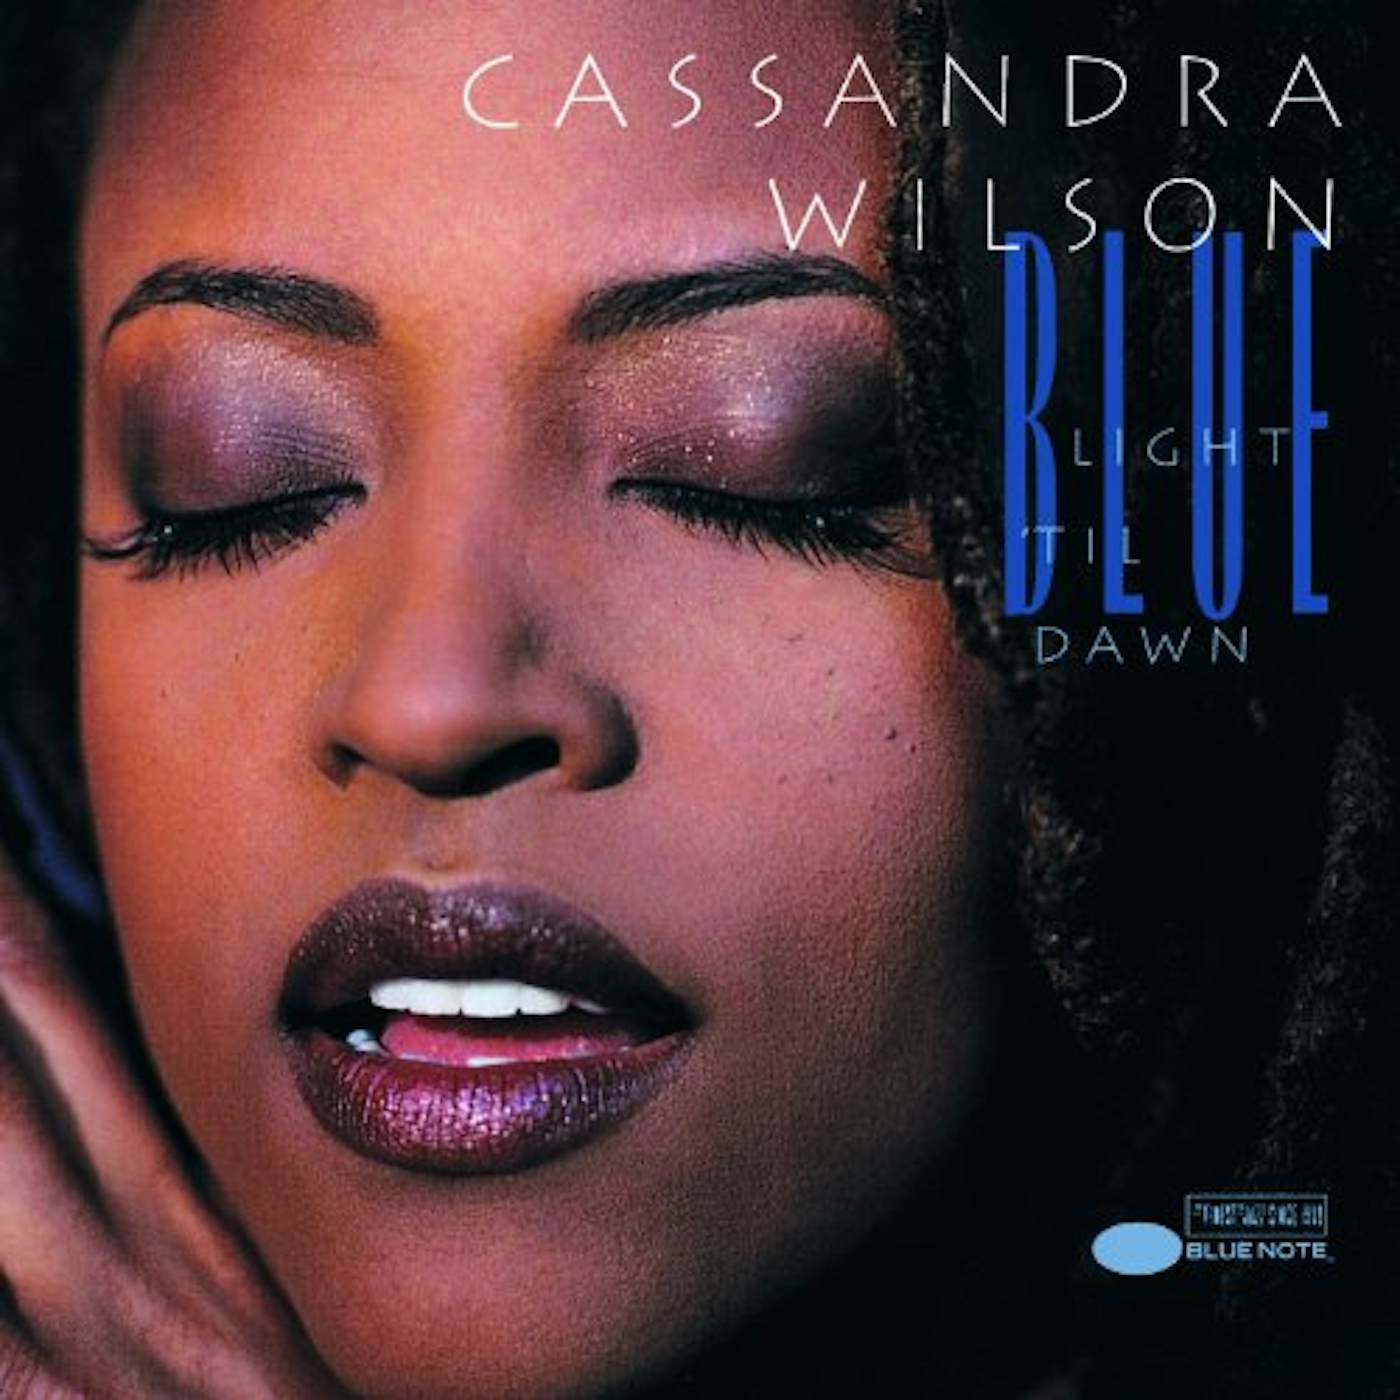 Cassandra Wilson BLUE LIGHT TIL DAWN CD